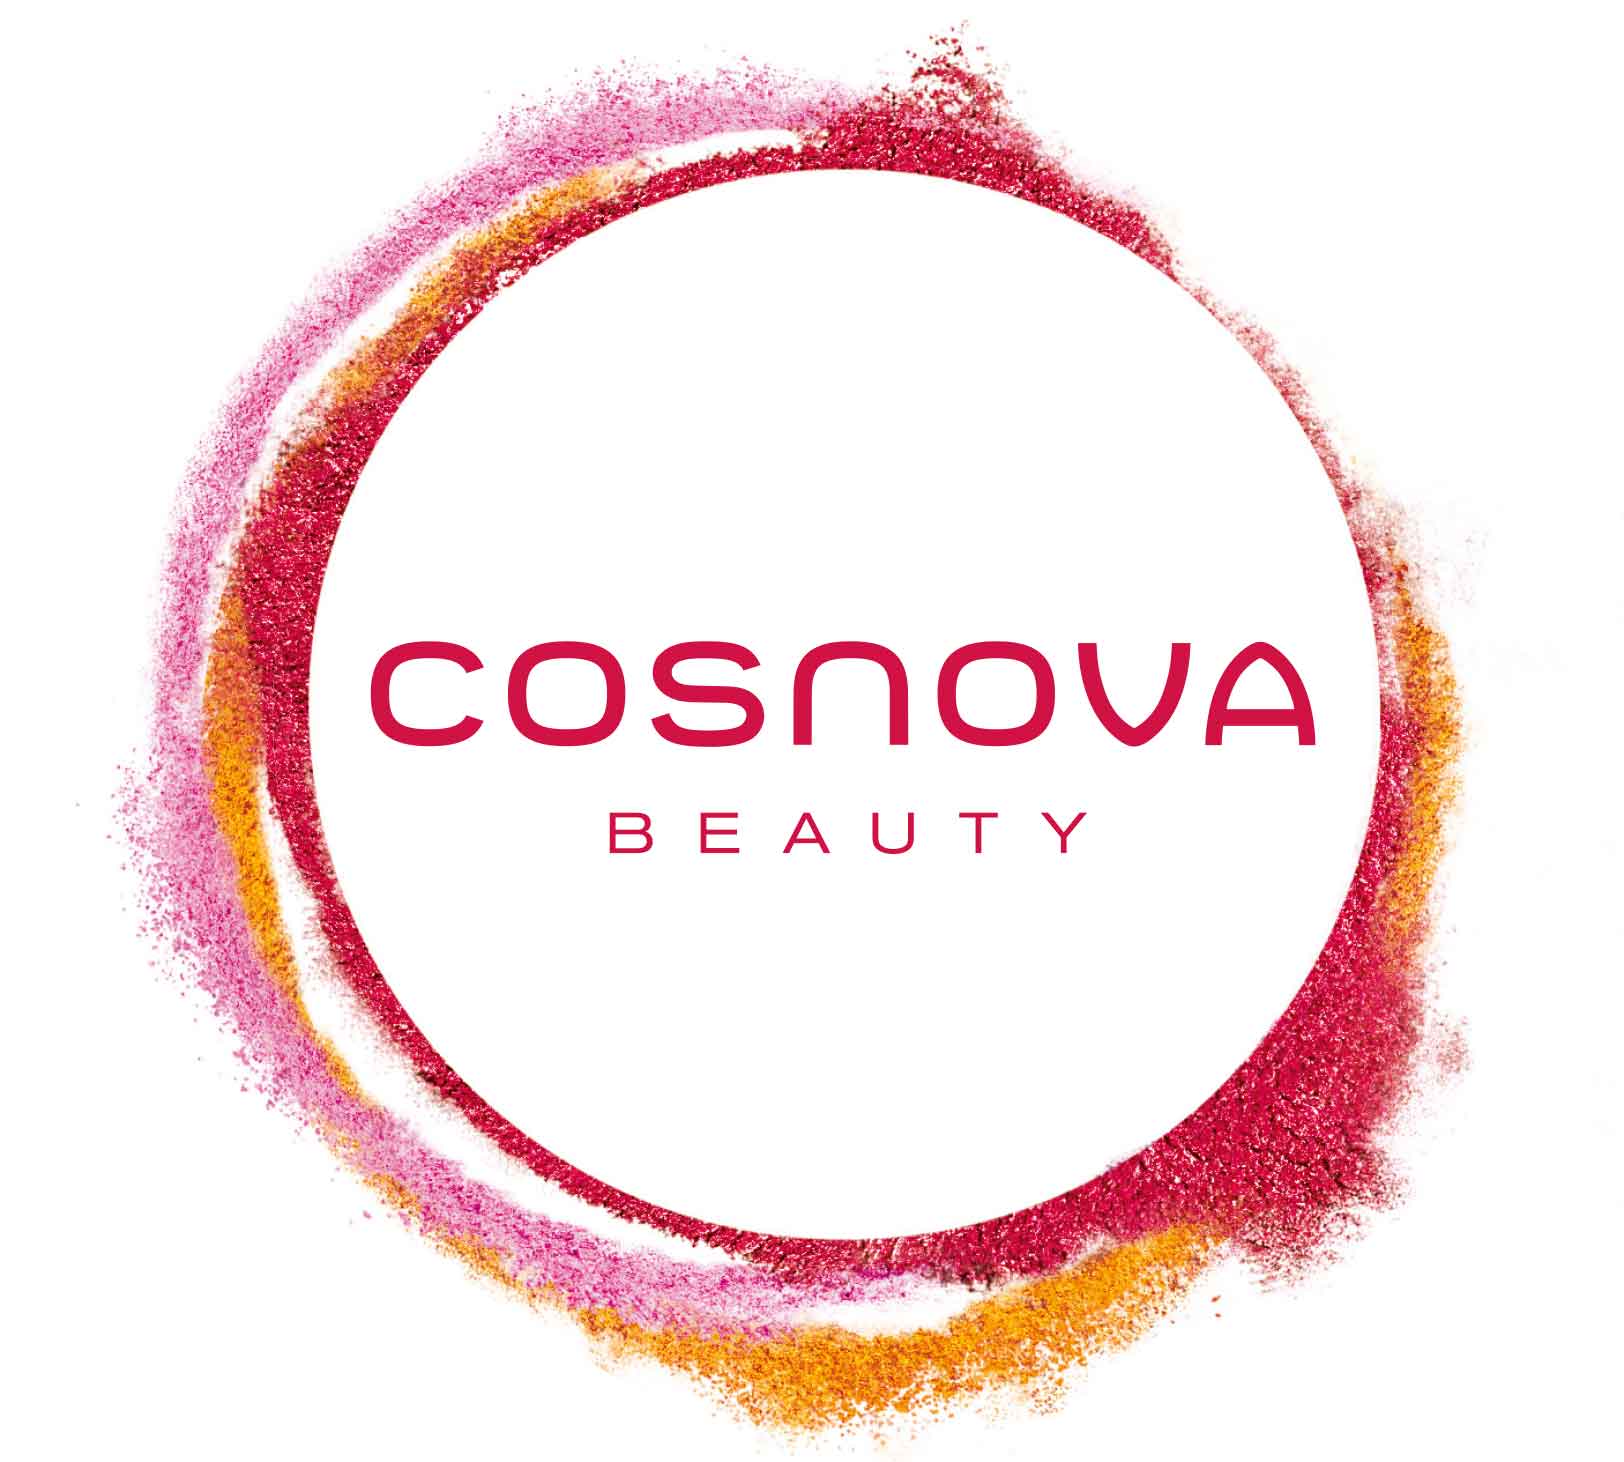 cosnova Beauty optimiert Datenversorgung des Handels